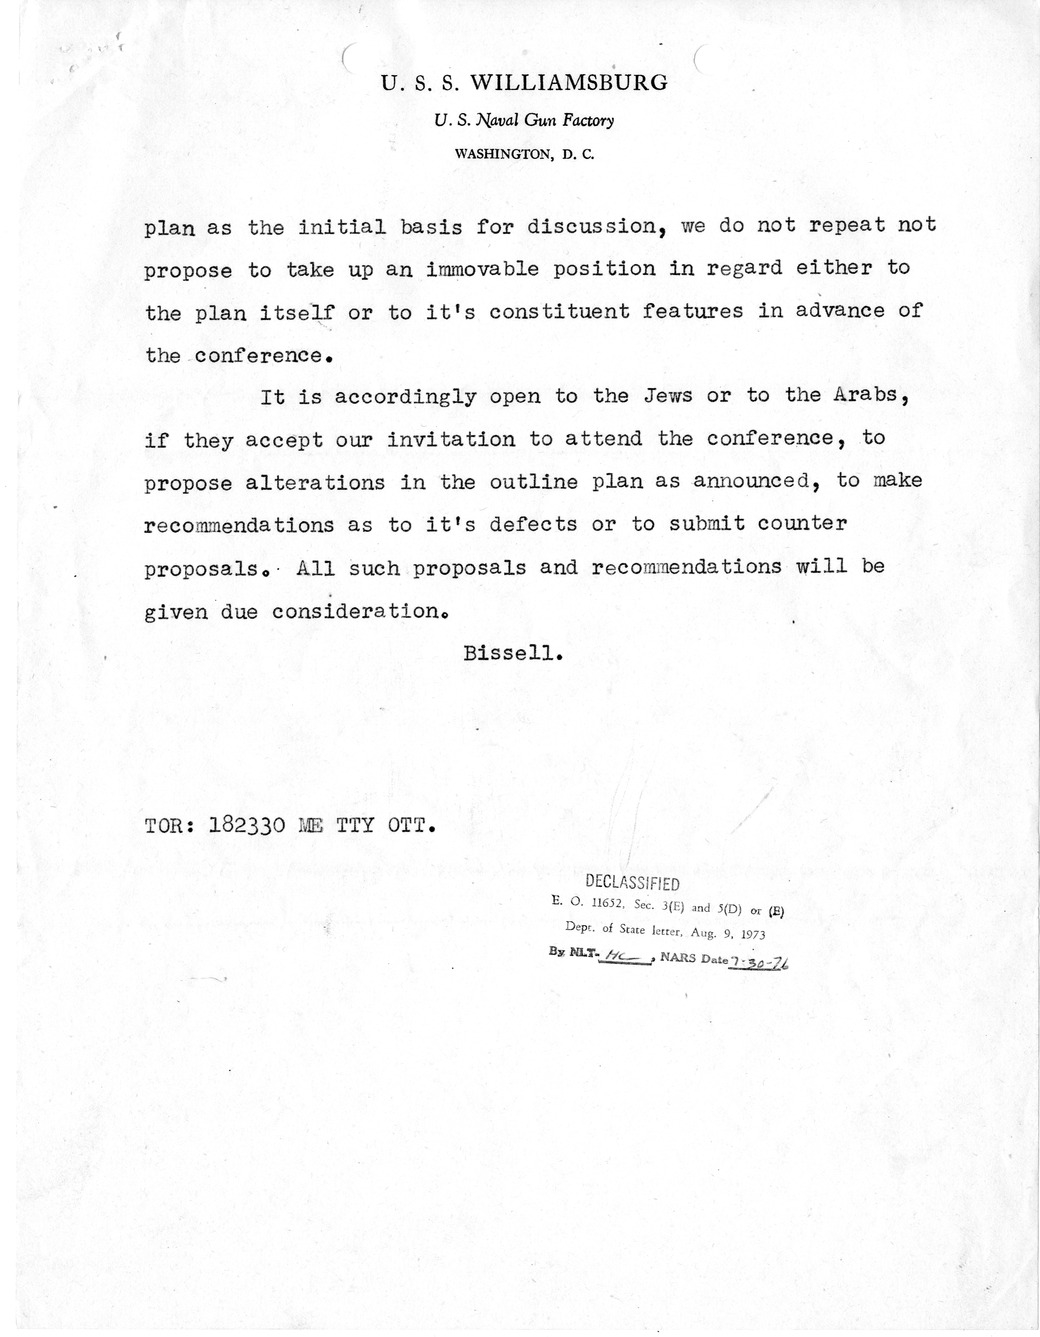 Memorandum from Prime Minister Clement Attlee to President Harry S. Truman